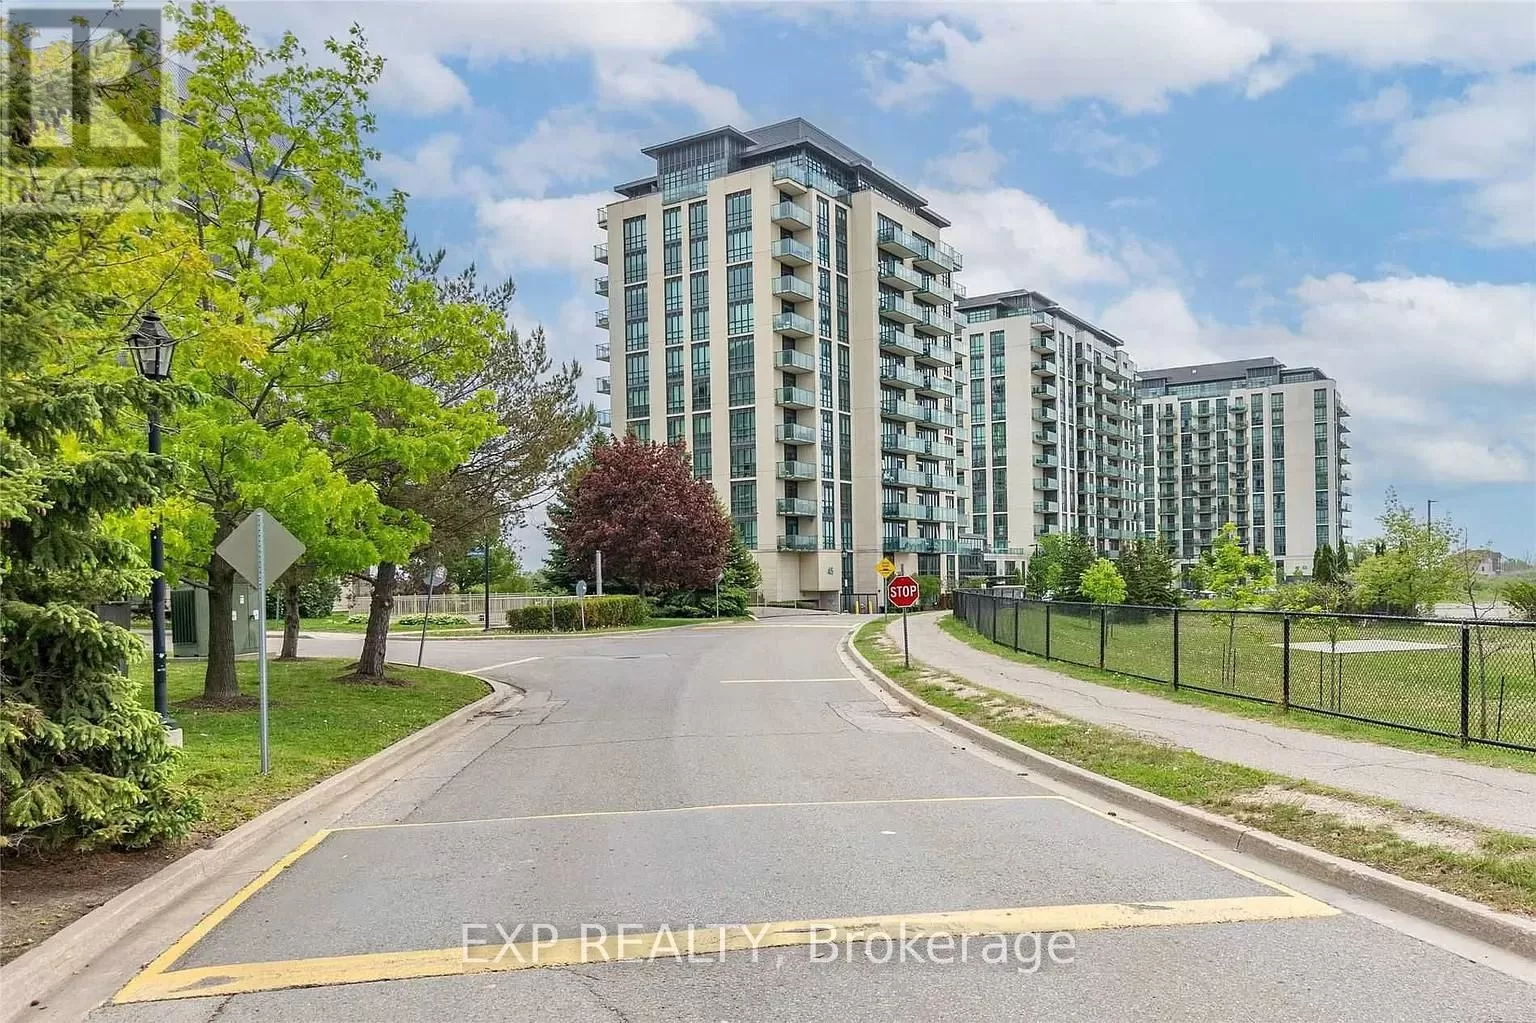 Apartment for rent: #503 -45 Yorkland Blvd, Brampton, Ontario L6P 4B4